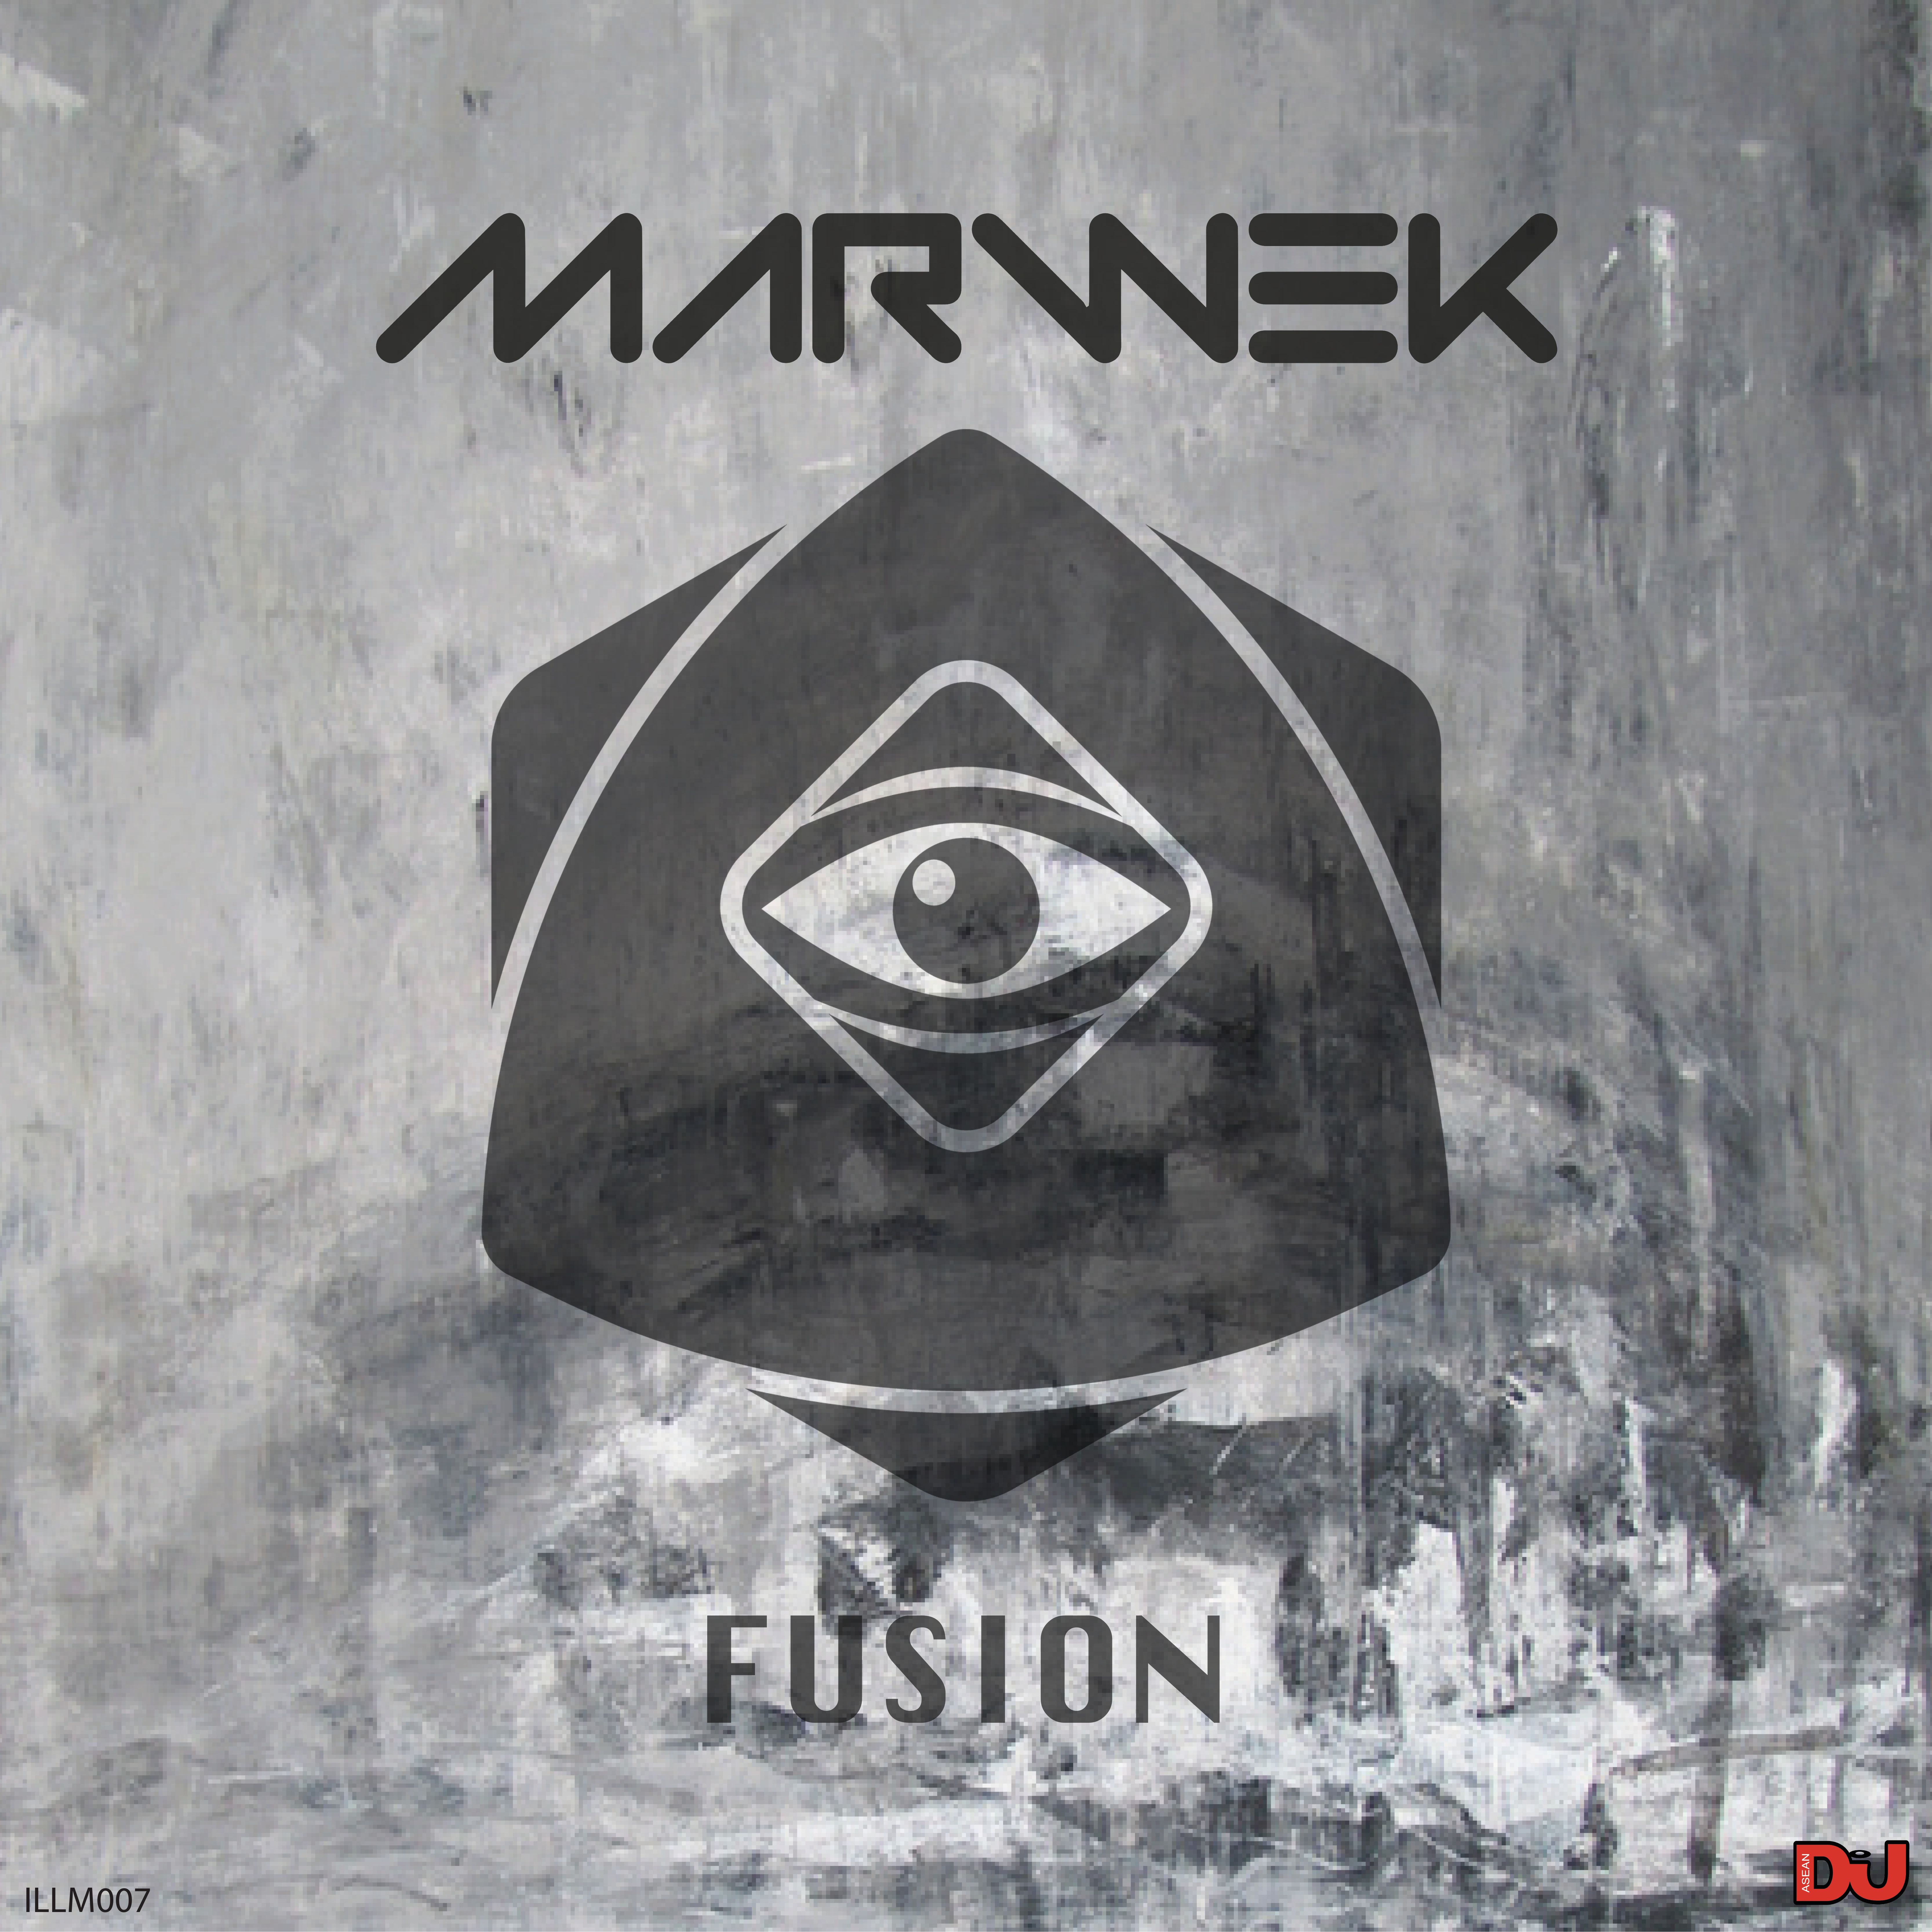 Landa Marwek - Fusion (Original Mix)